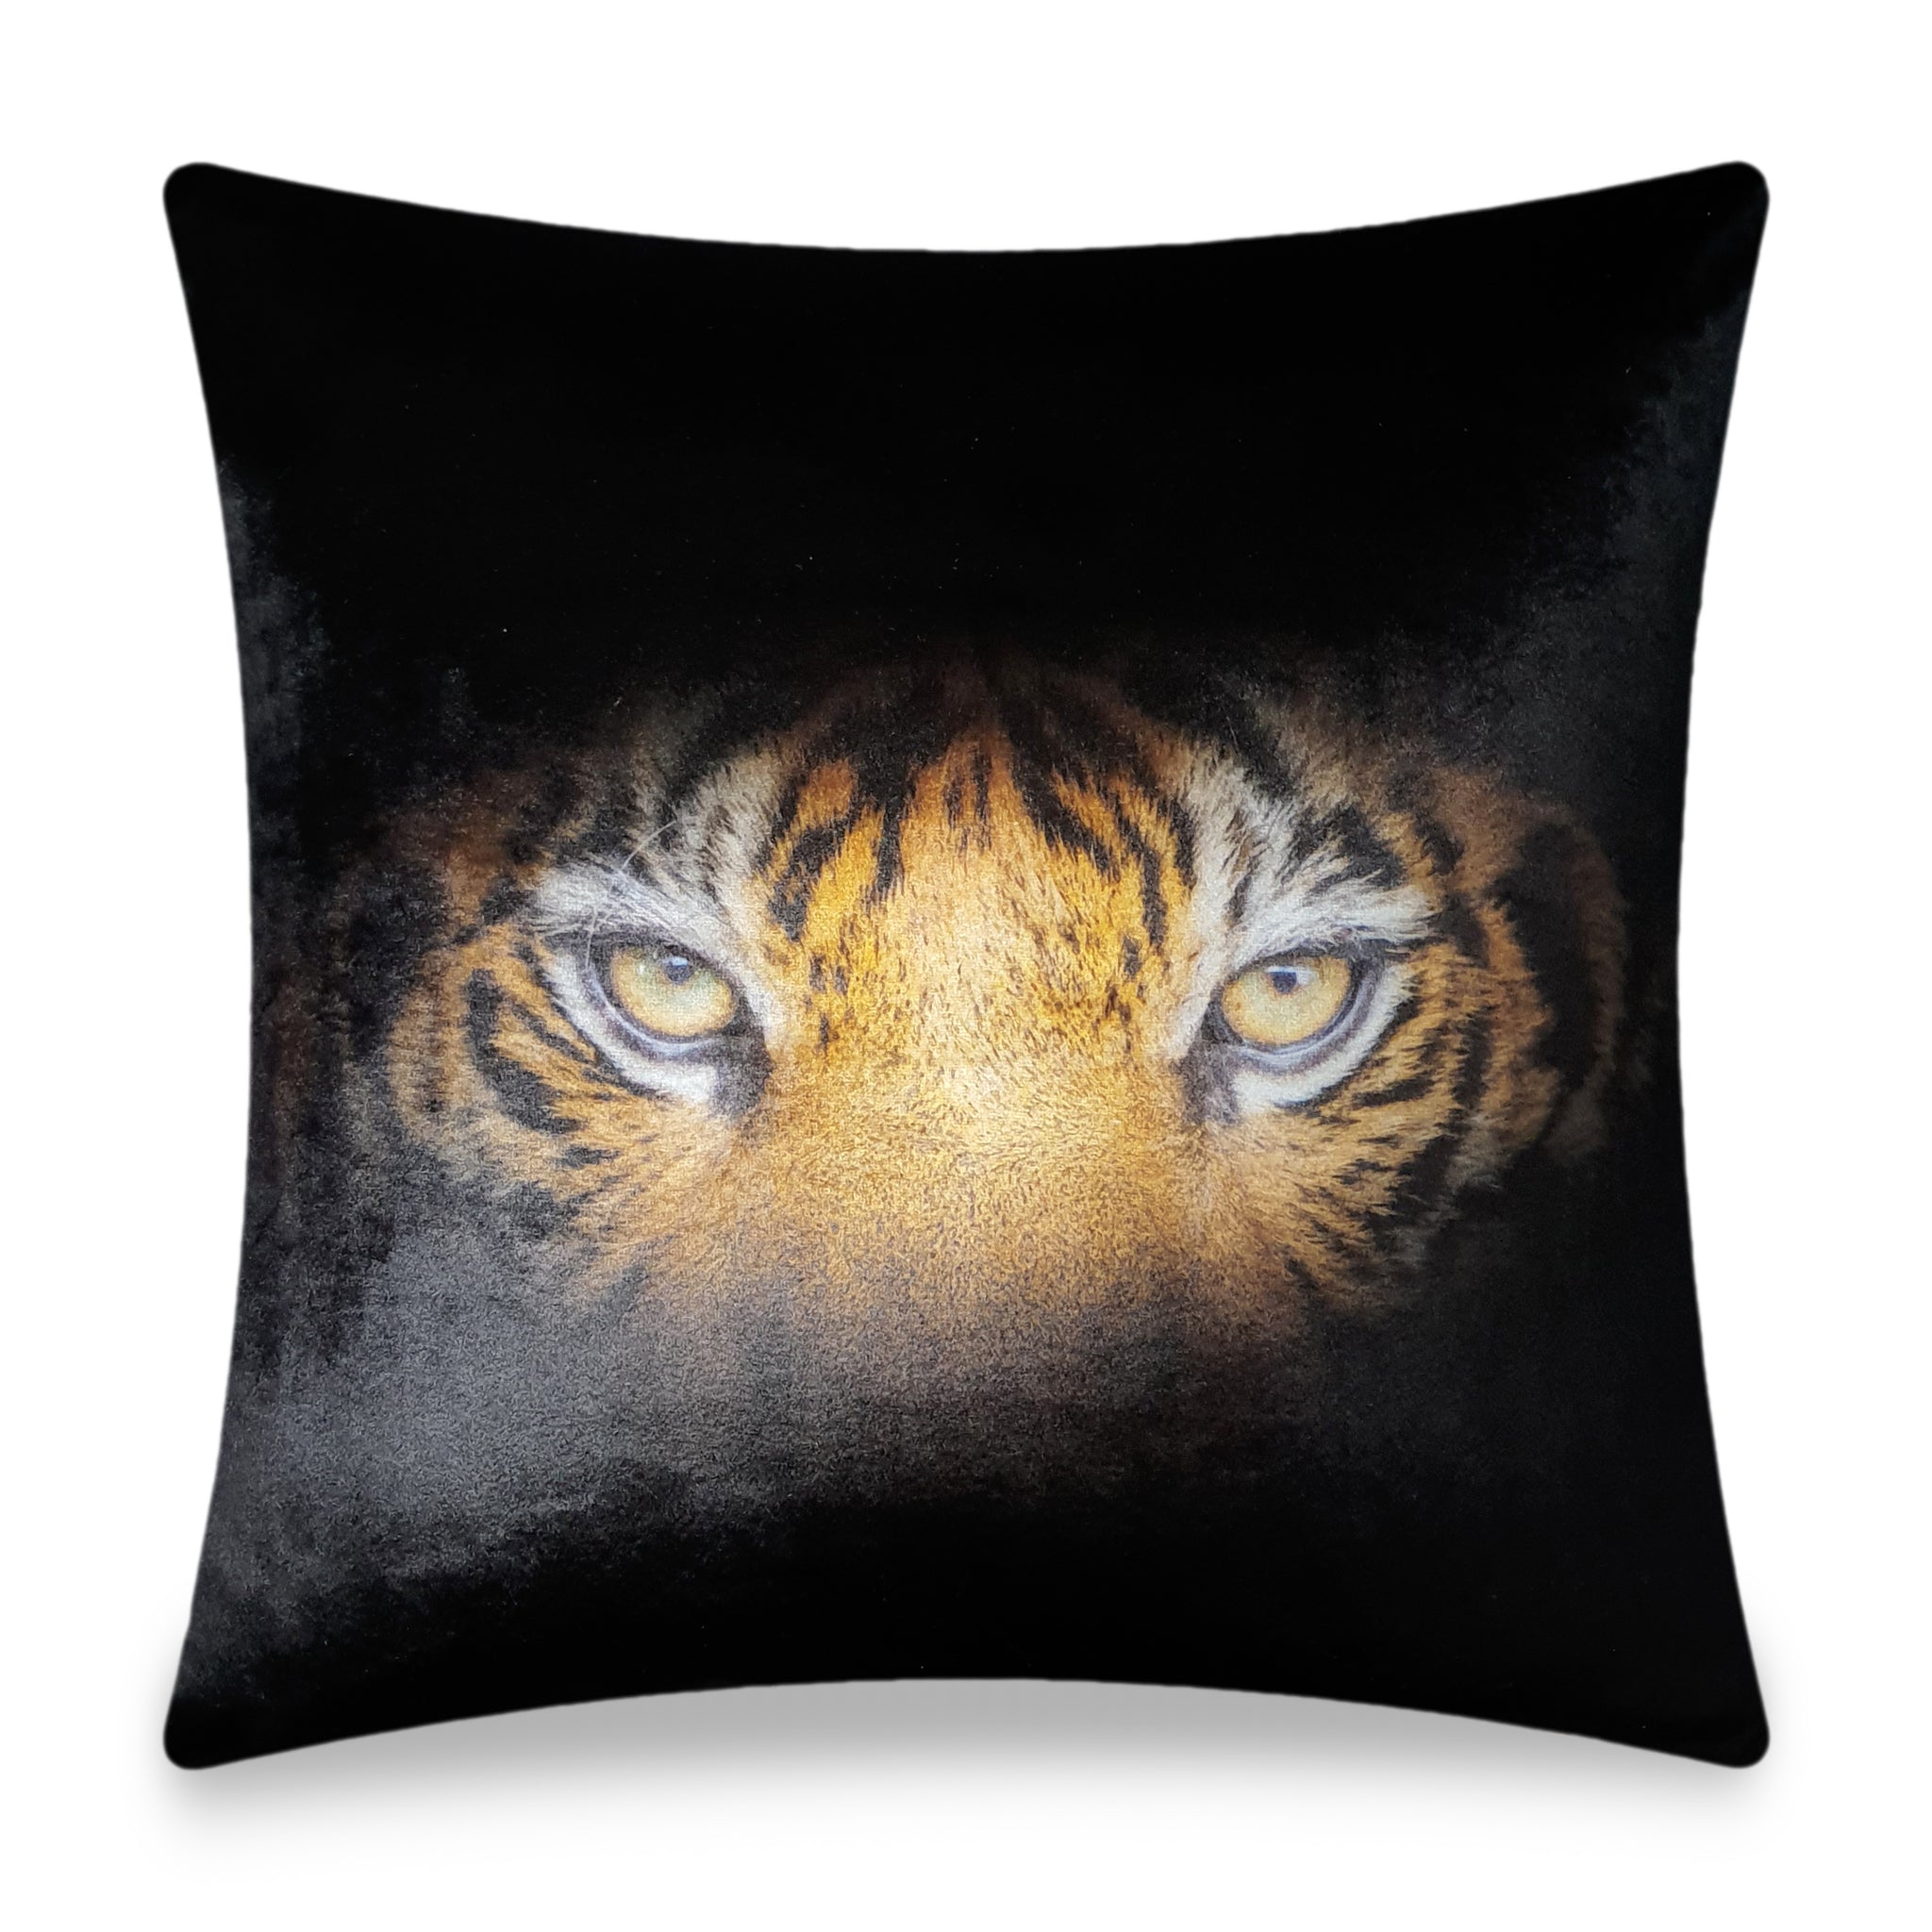  Velvet Cushion Cover Tiger Face Decorative Pillowcase Modern Home Decor Throw Pillow for Sofa Chair 45x45 cm 